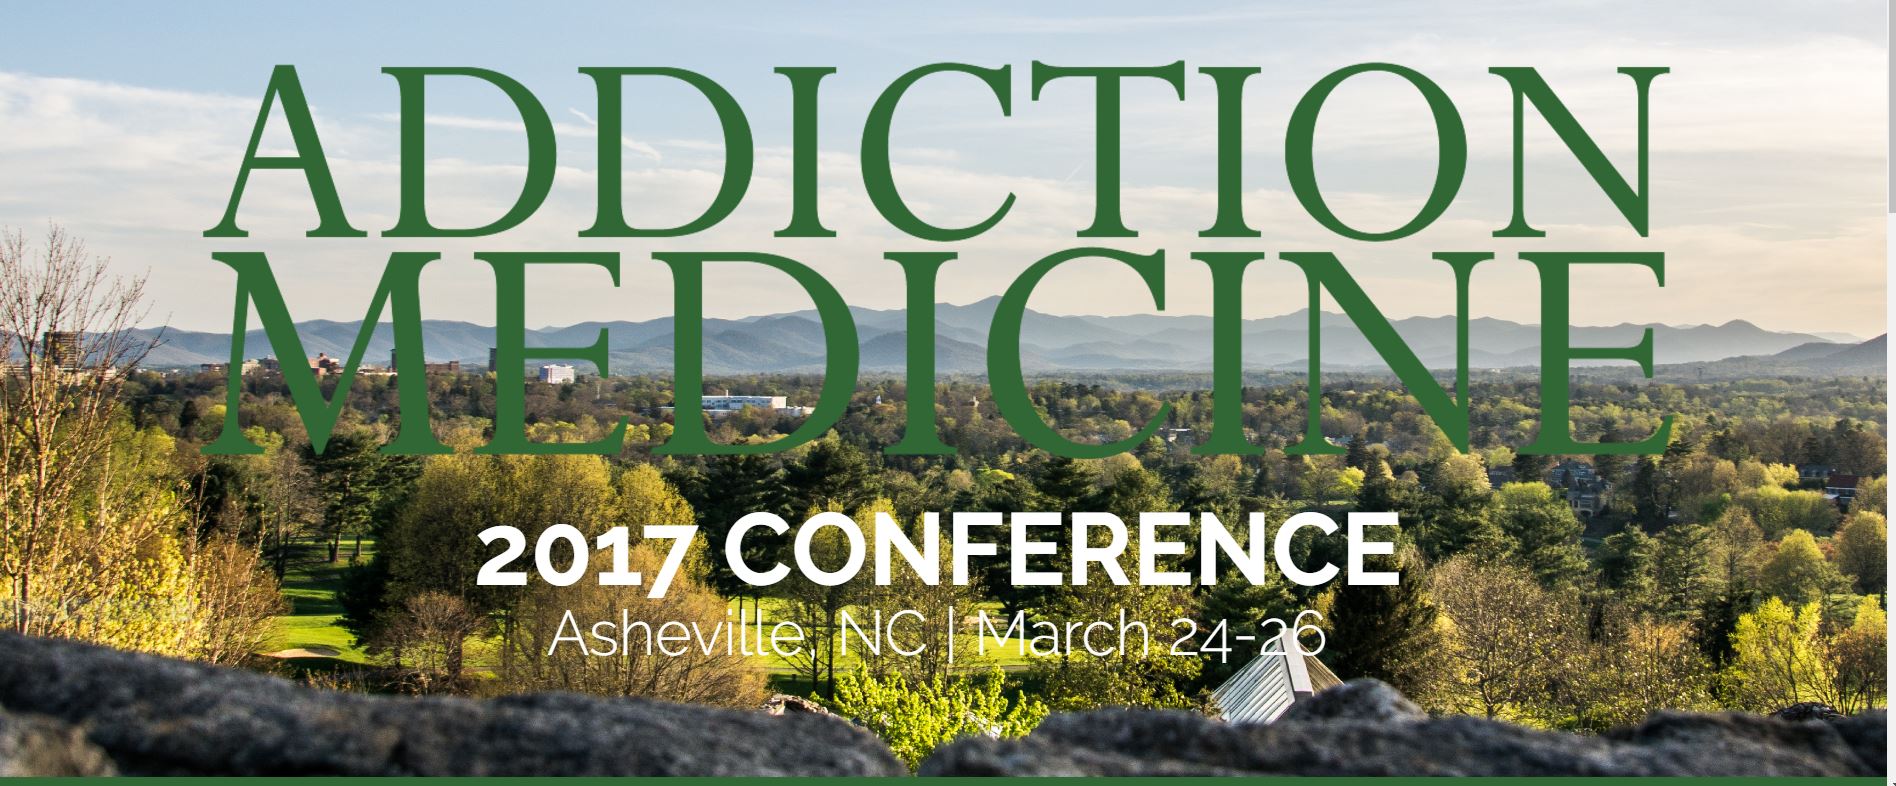 Addiction Medicine Conference 2017